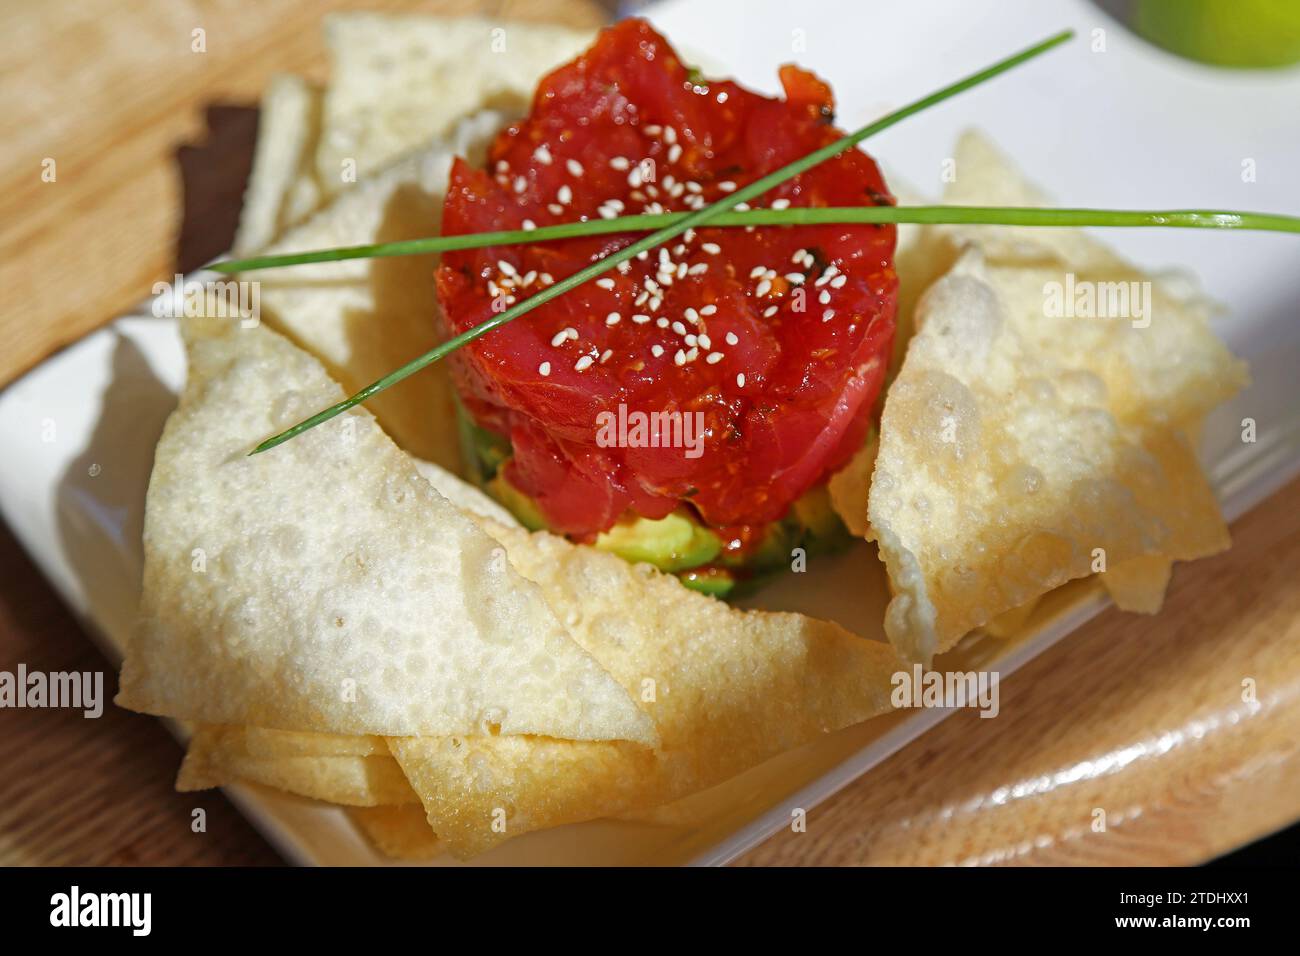 Tuna tartare with chips Stock Photo